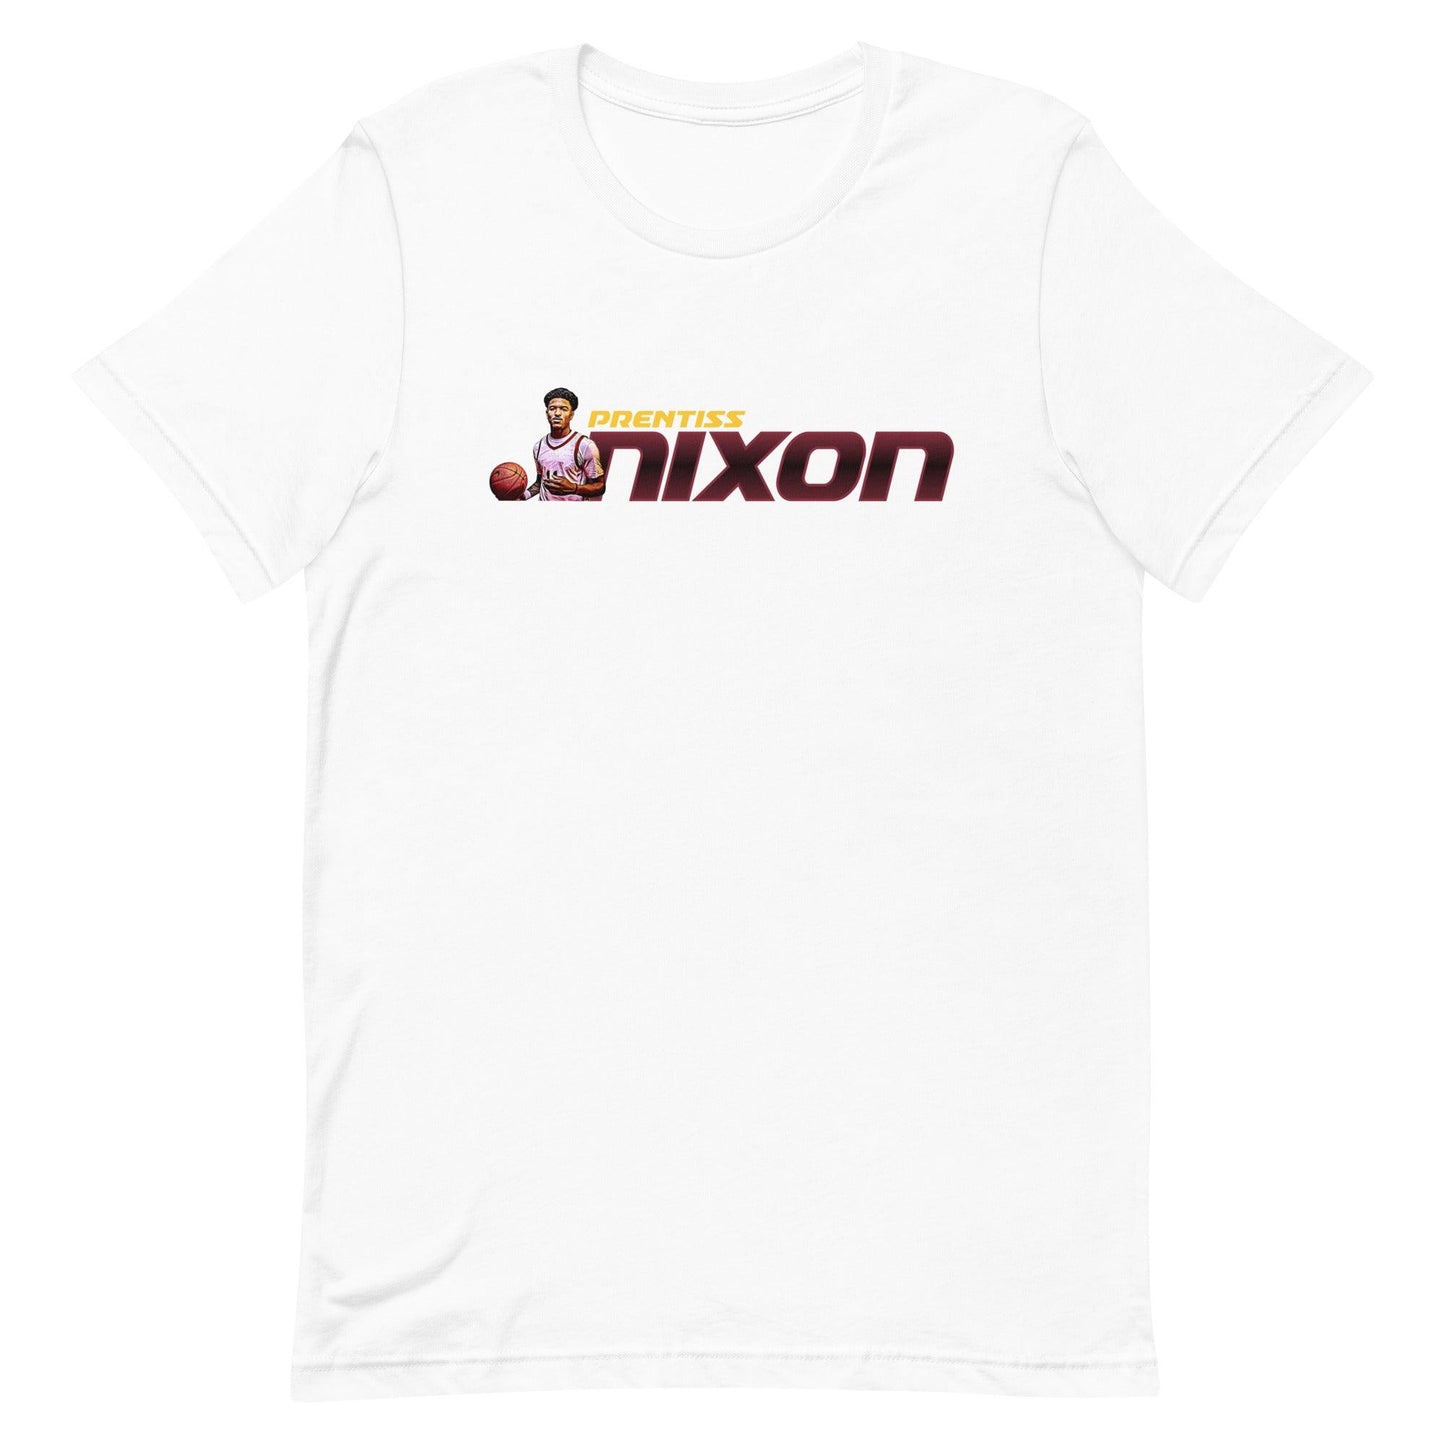 Prentiss Nixon “Essential” t-shirt - Fan Arch